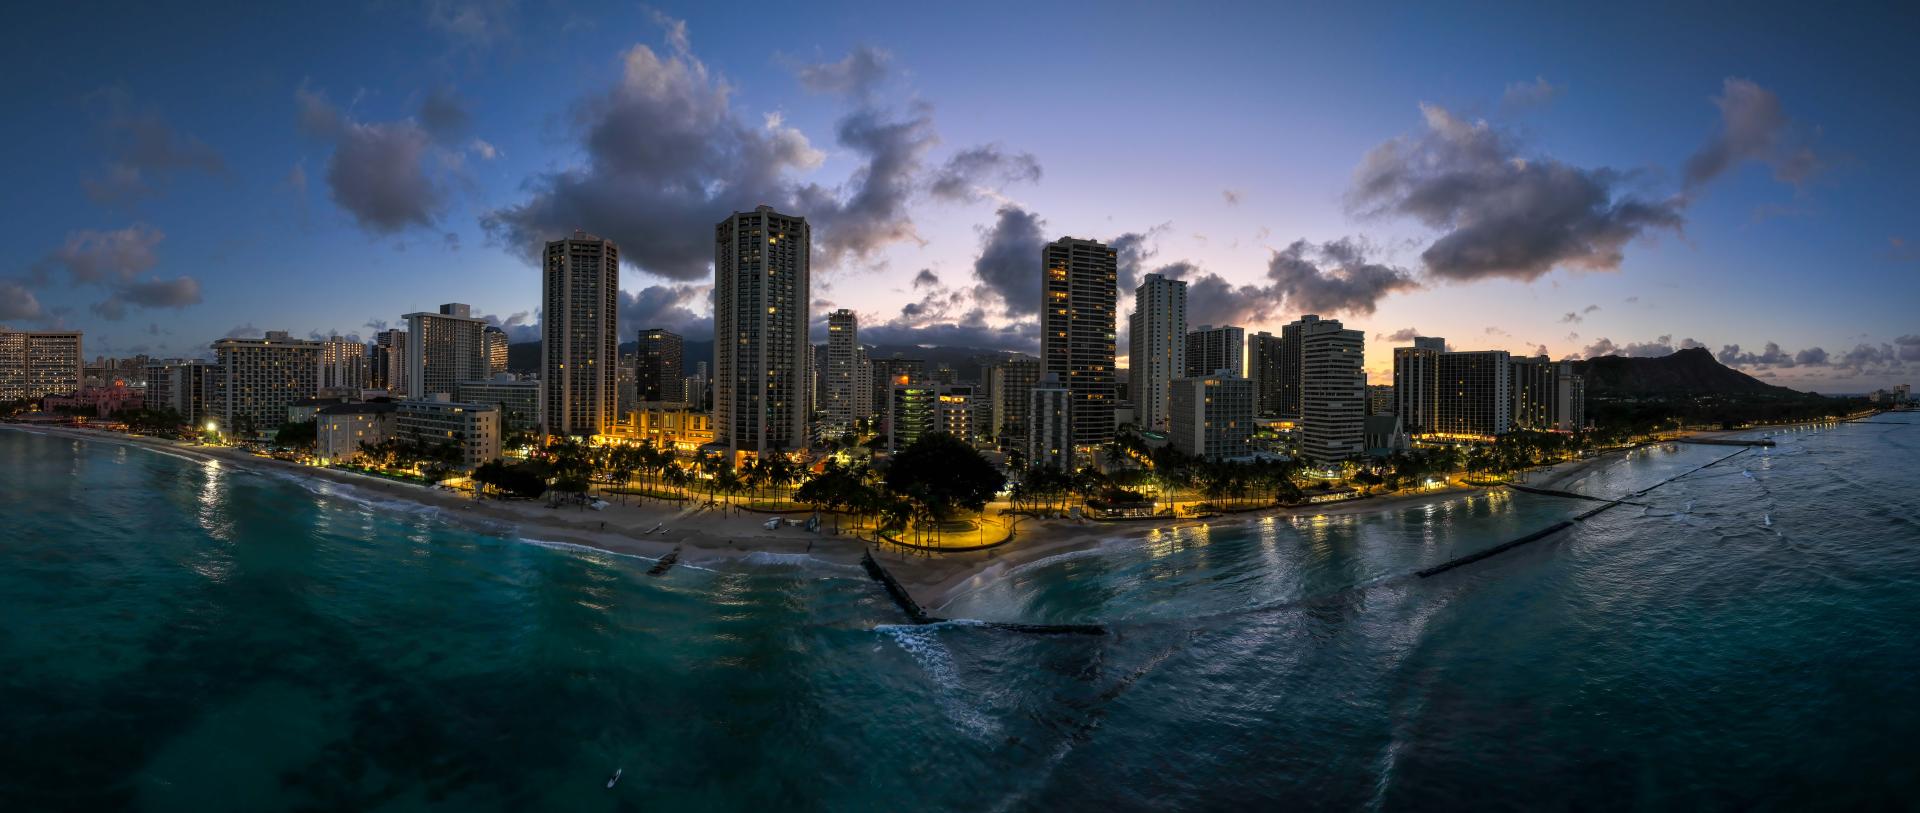 London Photography Awards Winner - City at Dawn: Honolulu’s Tranquil Awakening by the Sea